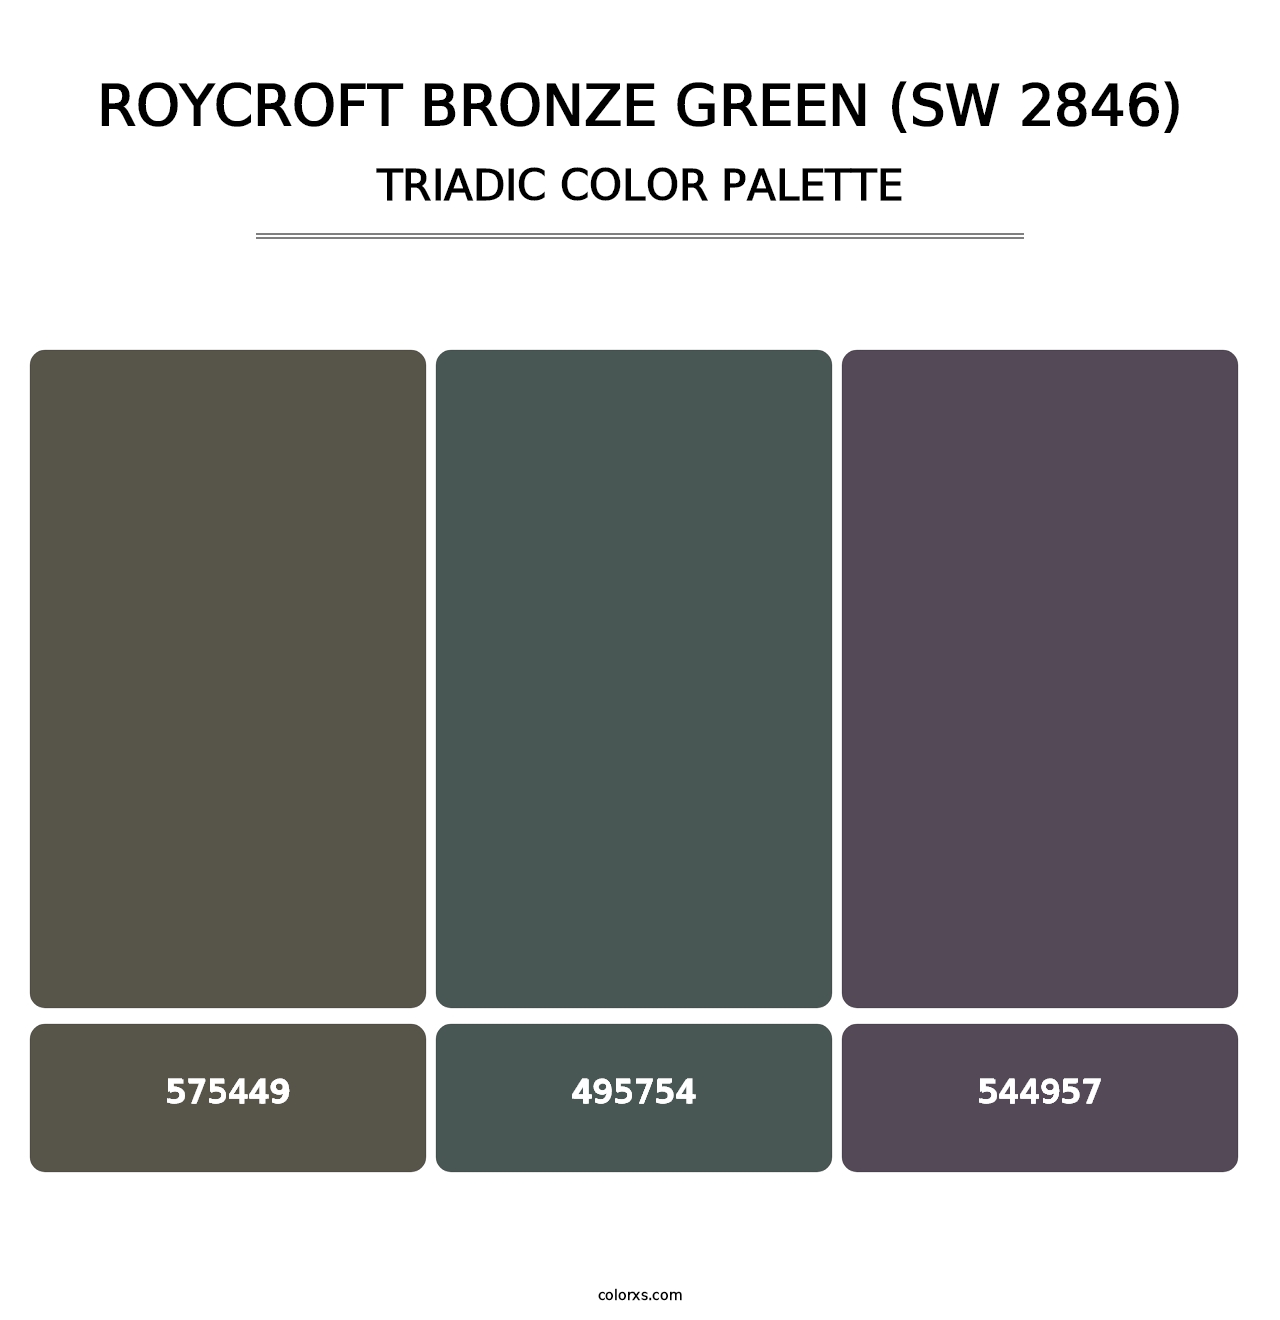 Roycroft Bronze Green (SW 2846) - Triadic Color Palette